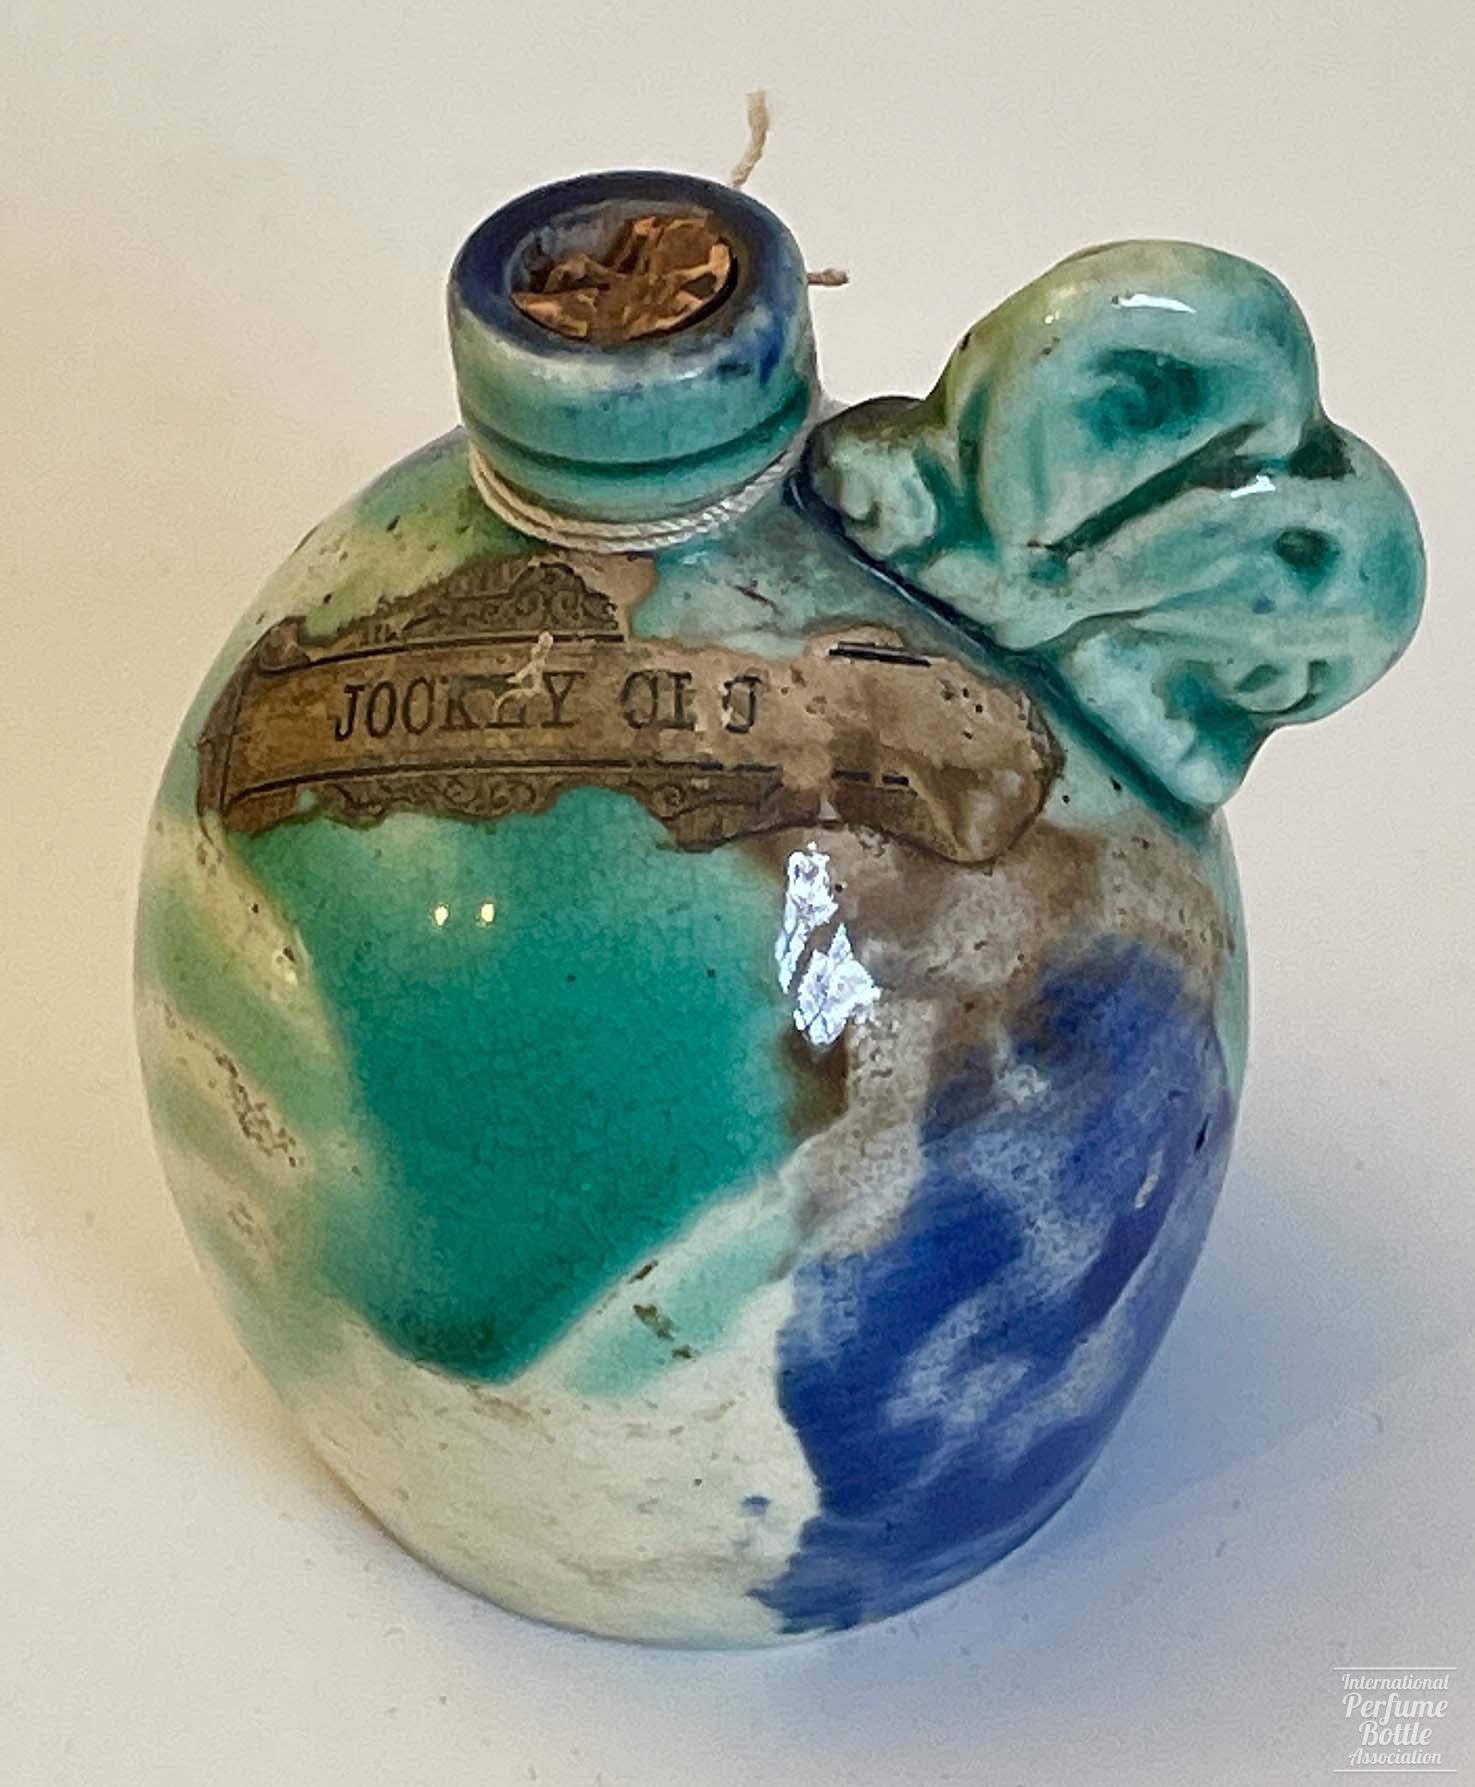 "Jockey Club" Ceramic Bottle by Rickseckers